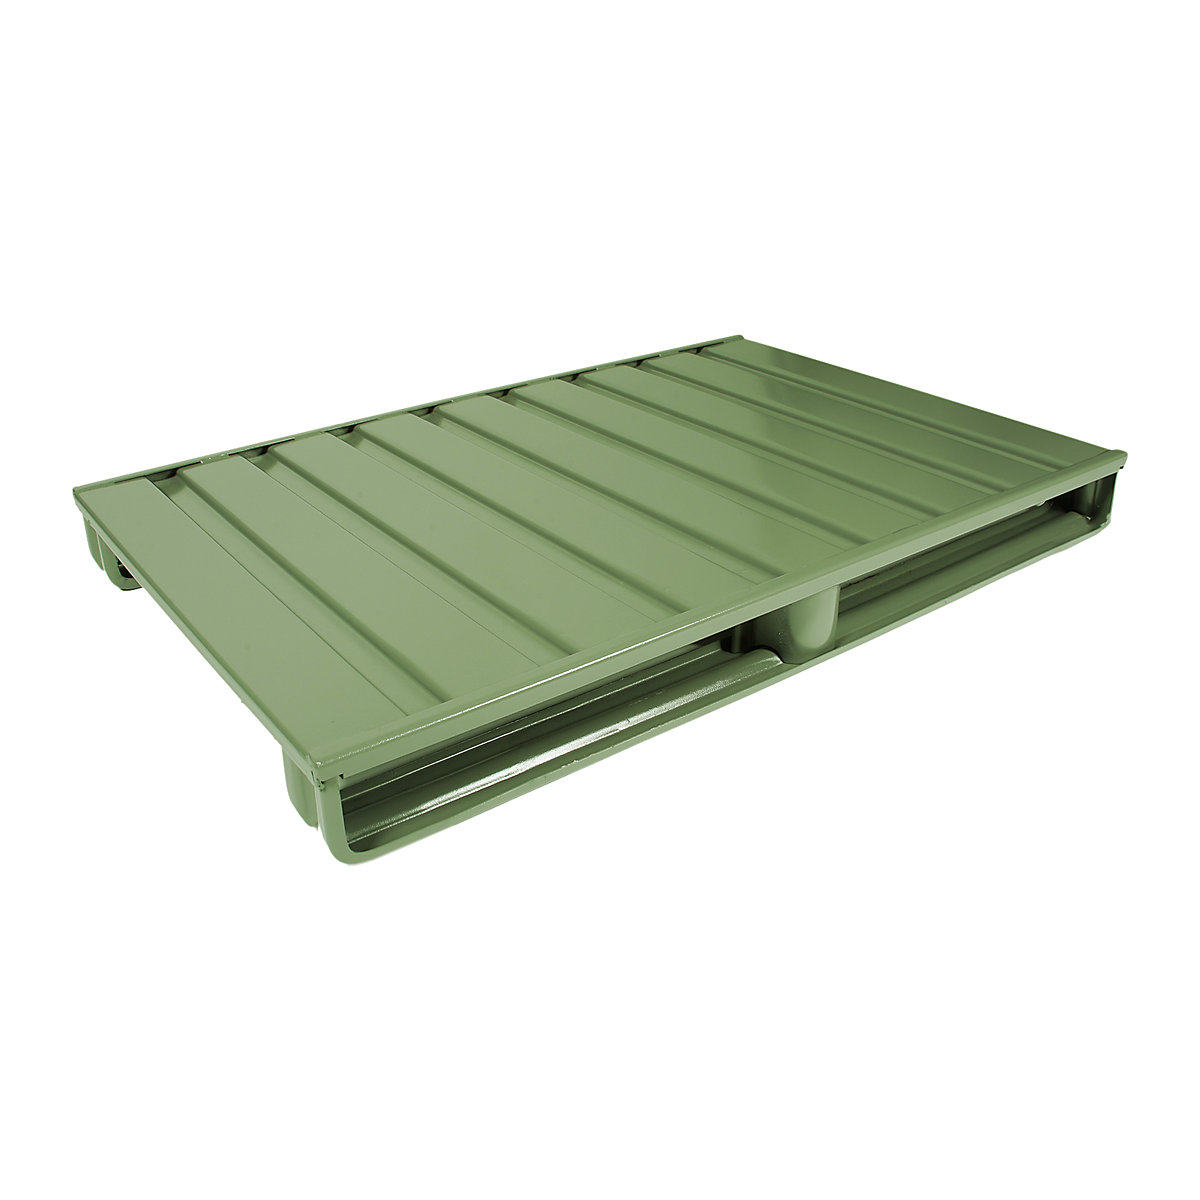 Palet plano de acero – Heson, L x A 1200 x 1000 mm, carga máx. 2000 kg, verde reseda-4